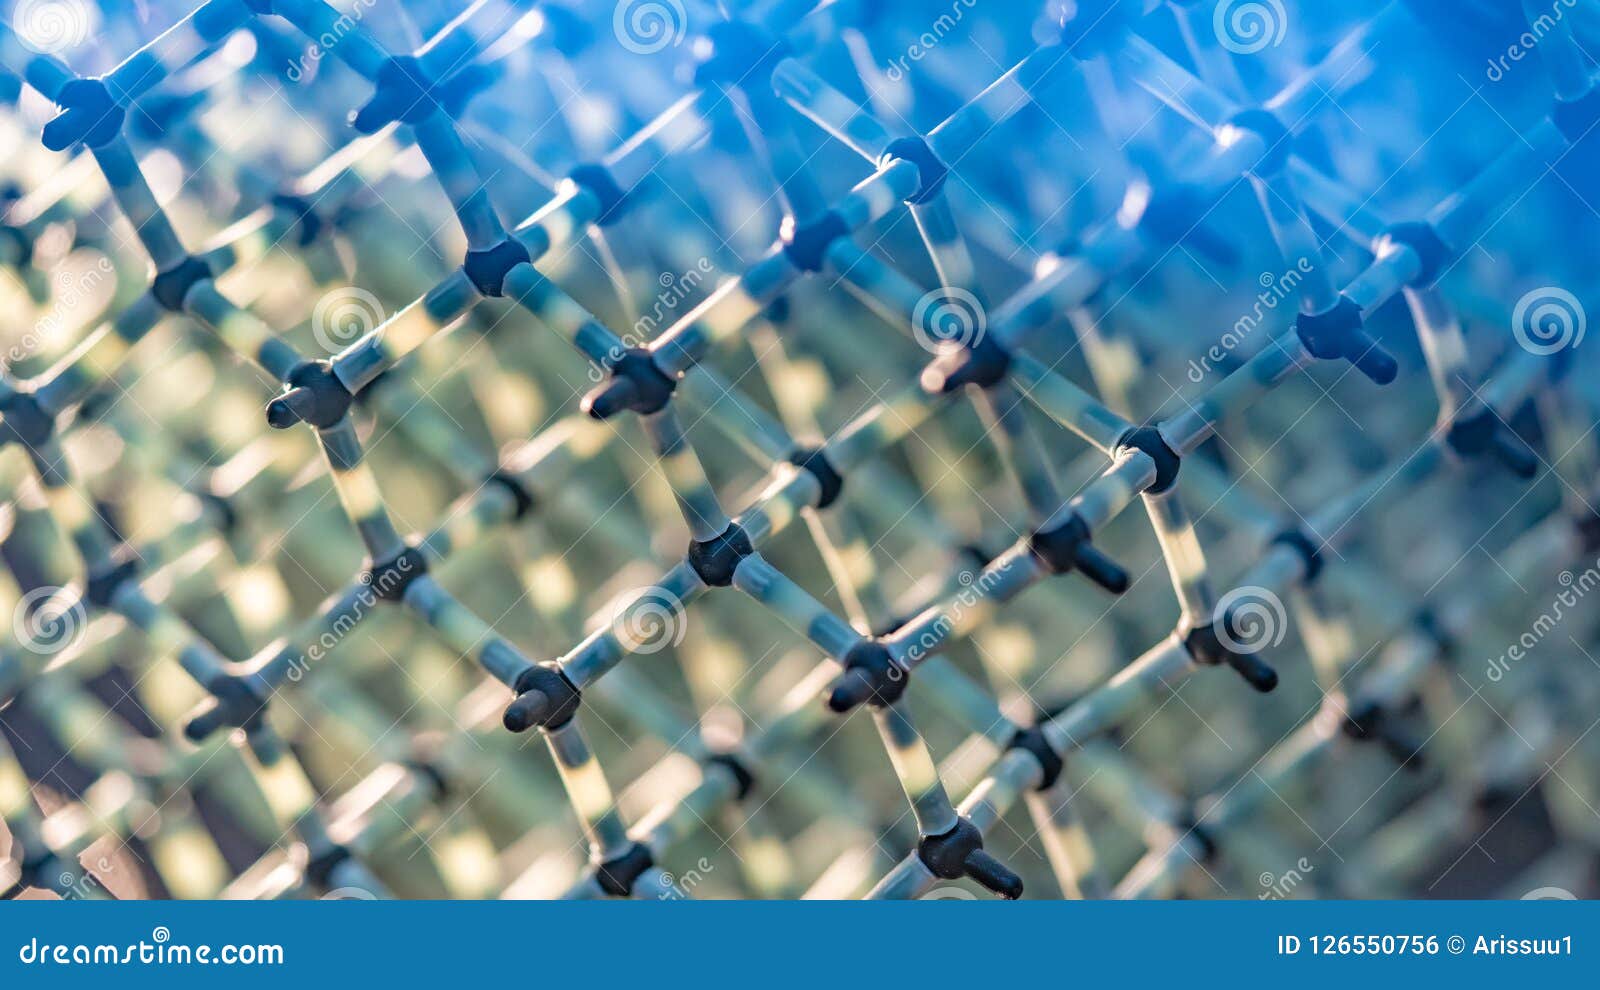 water molecule chemical covalent bond